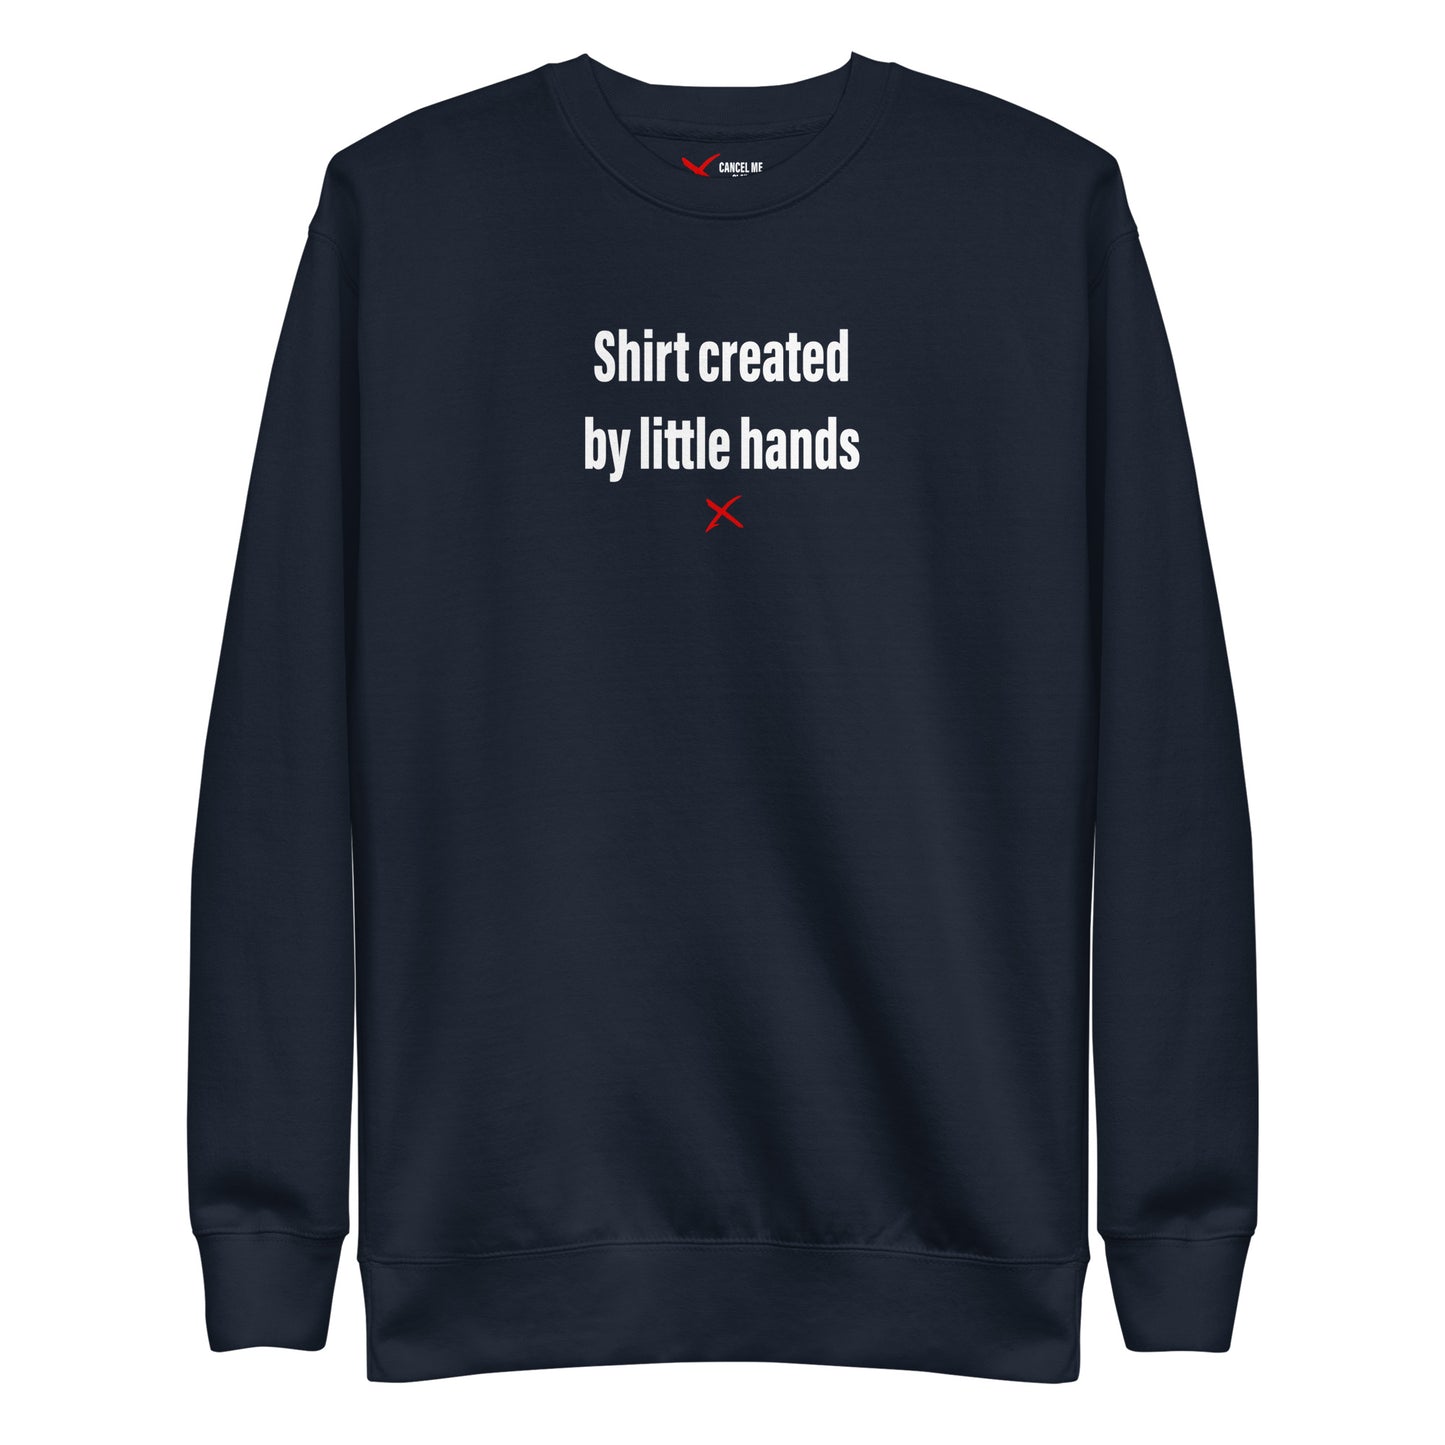 Shirt created by little hands - Sweatshirt